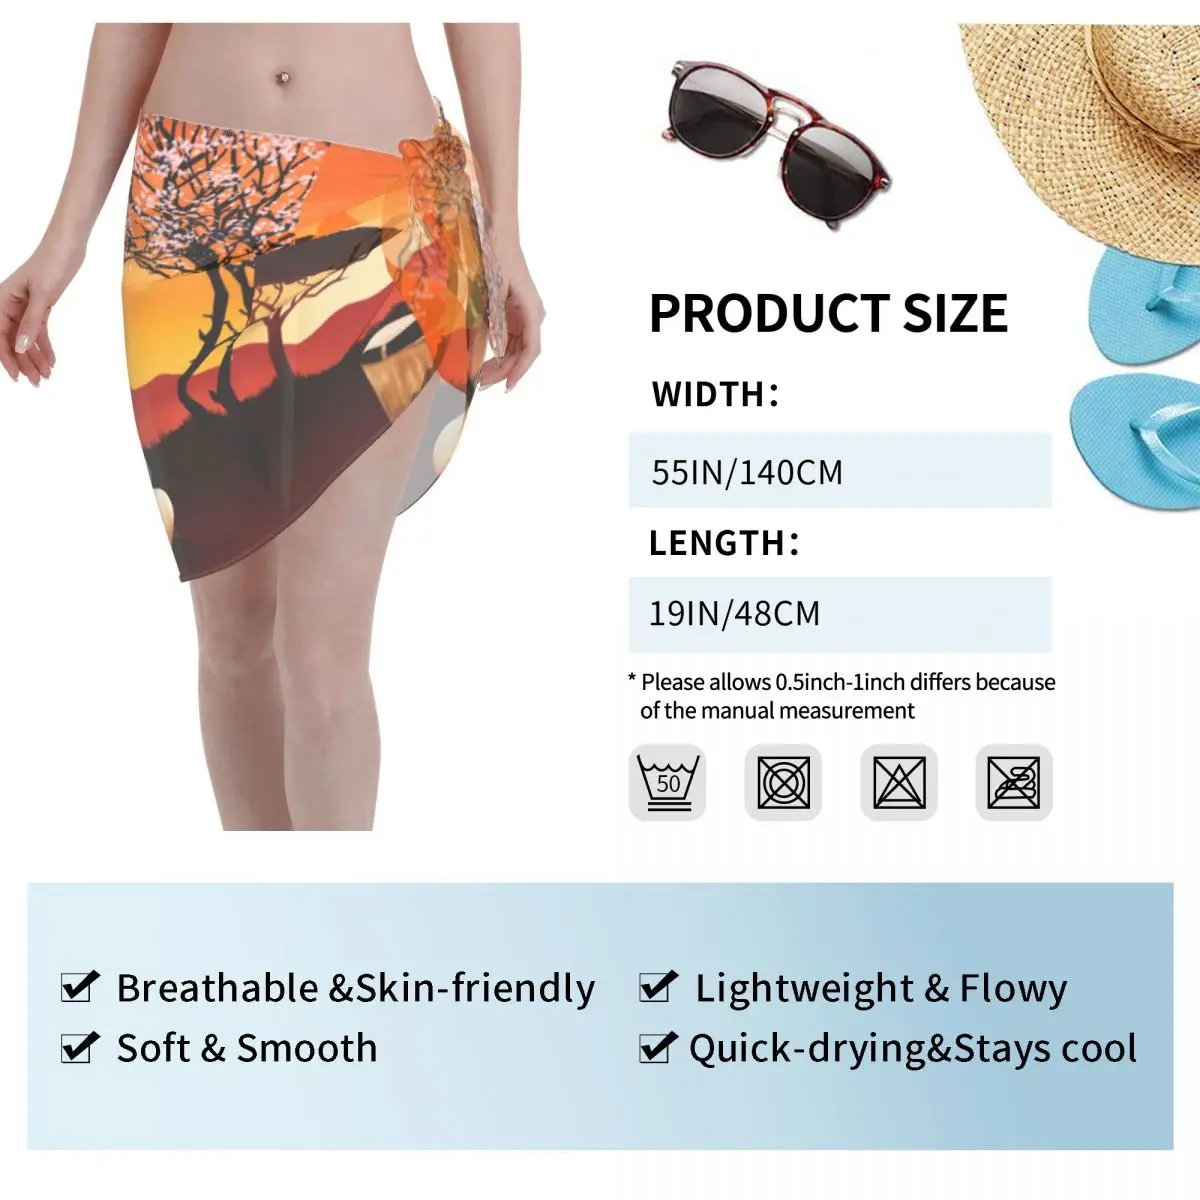 Chiffon Swimwear Pareo Scarf African Sunset Beach Cover Up Wrap Kaftan Sarong Skirt Print Beachwear Swimsuit Bikini Cover-Ups